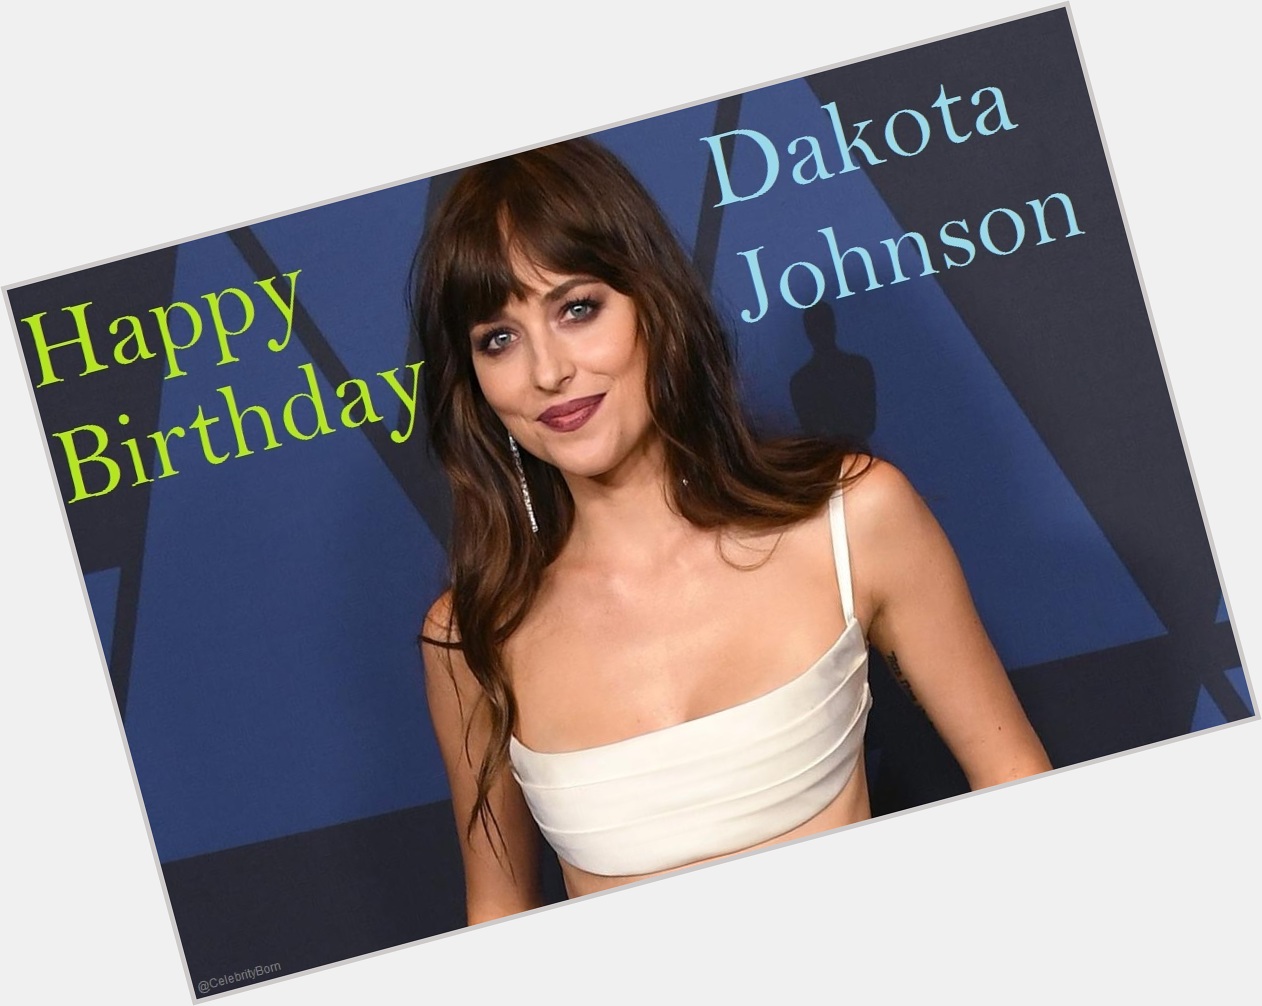 Happy Birthday to Dakota Johnson (Actress & Model) 